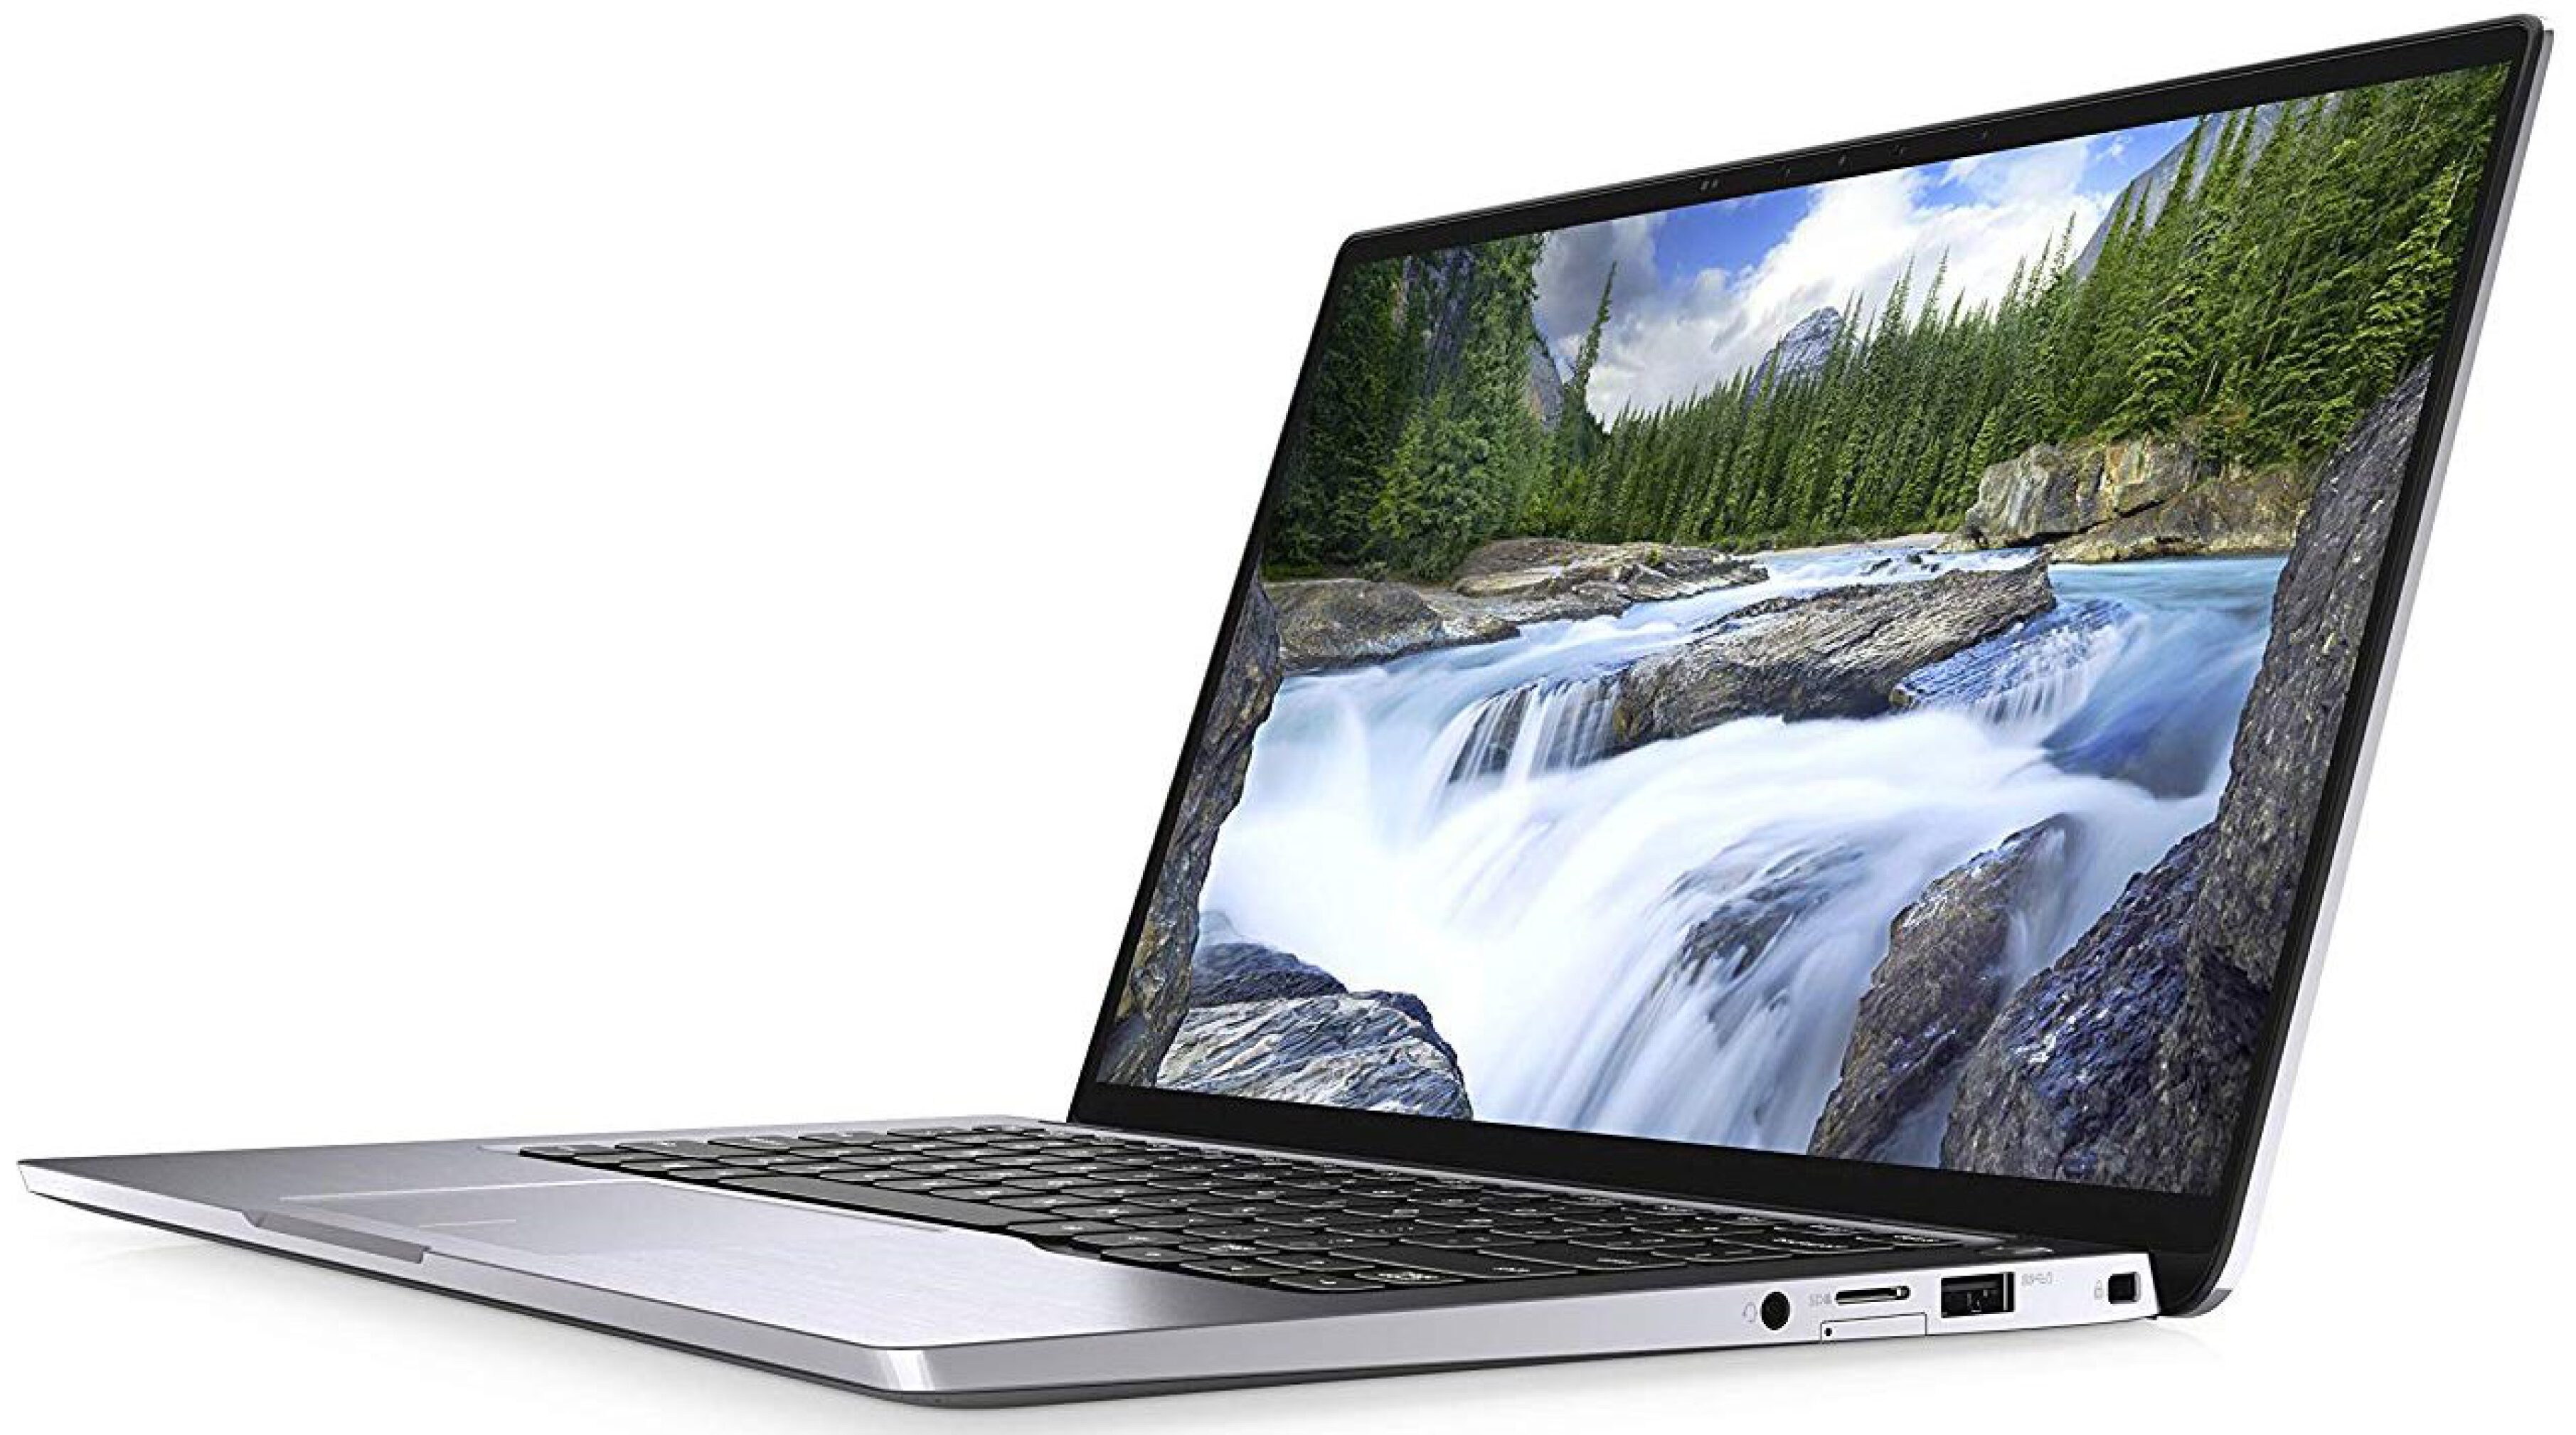  خرید لپ تاپ Dell Latitude 7400 i5 x360 touch | لاکچری لپ تاپ 